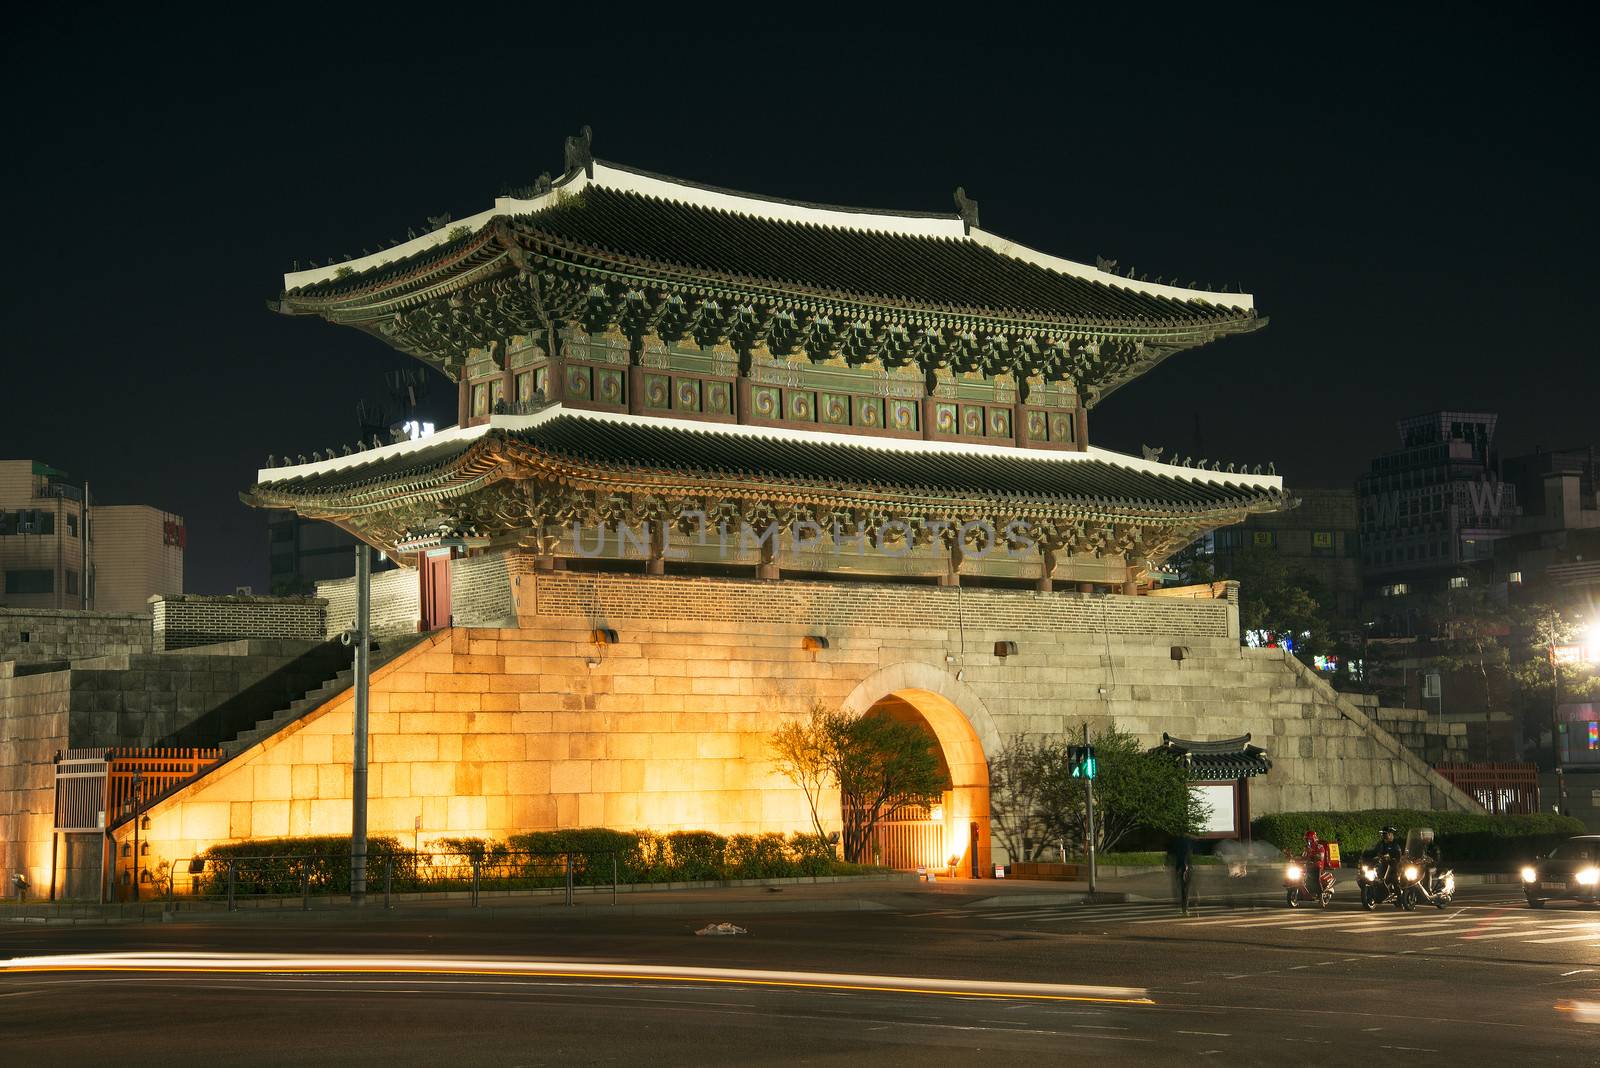 dongdaemun gate landmark in seoul south korea at night